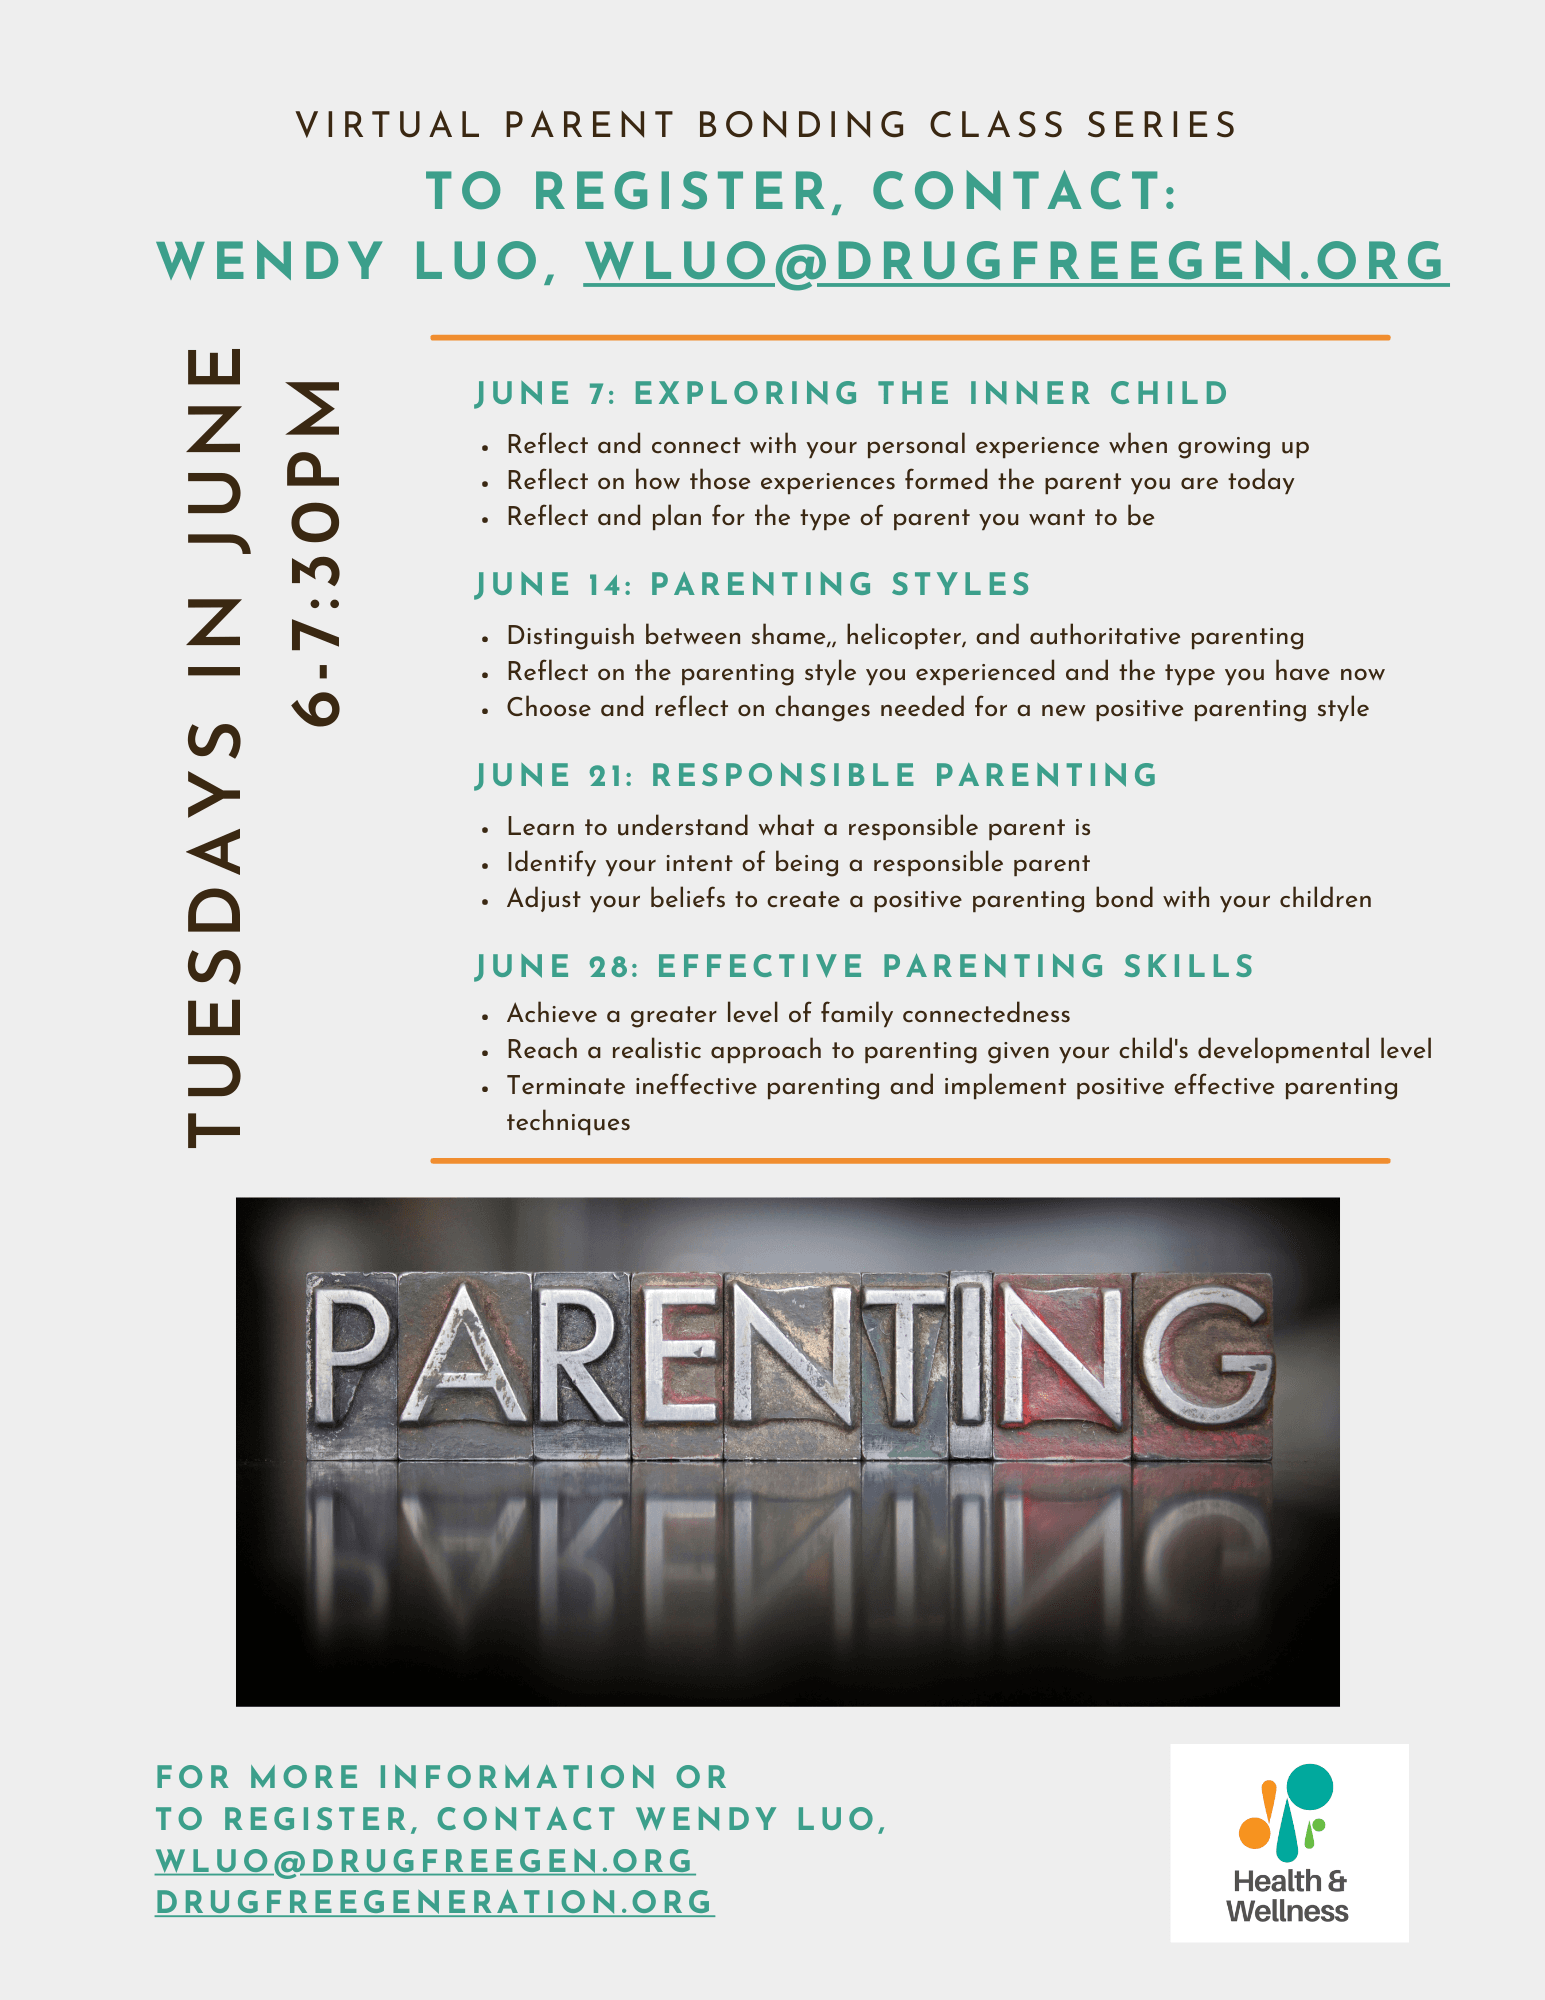 Free Parenting Classes in June